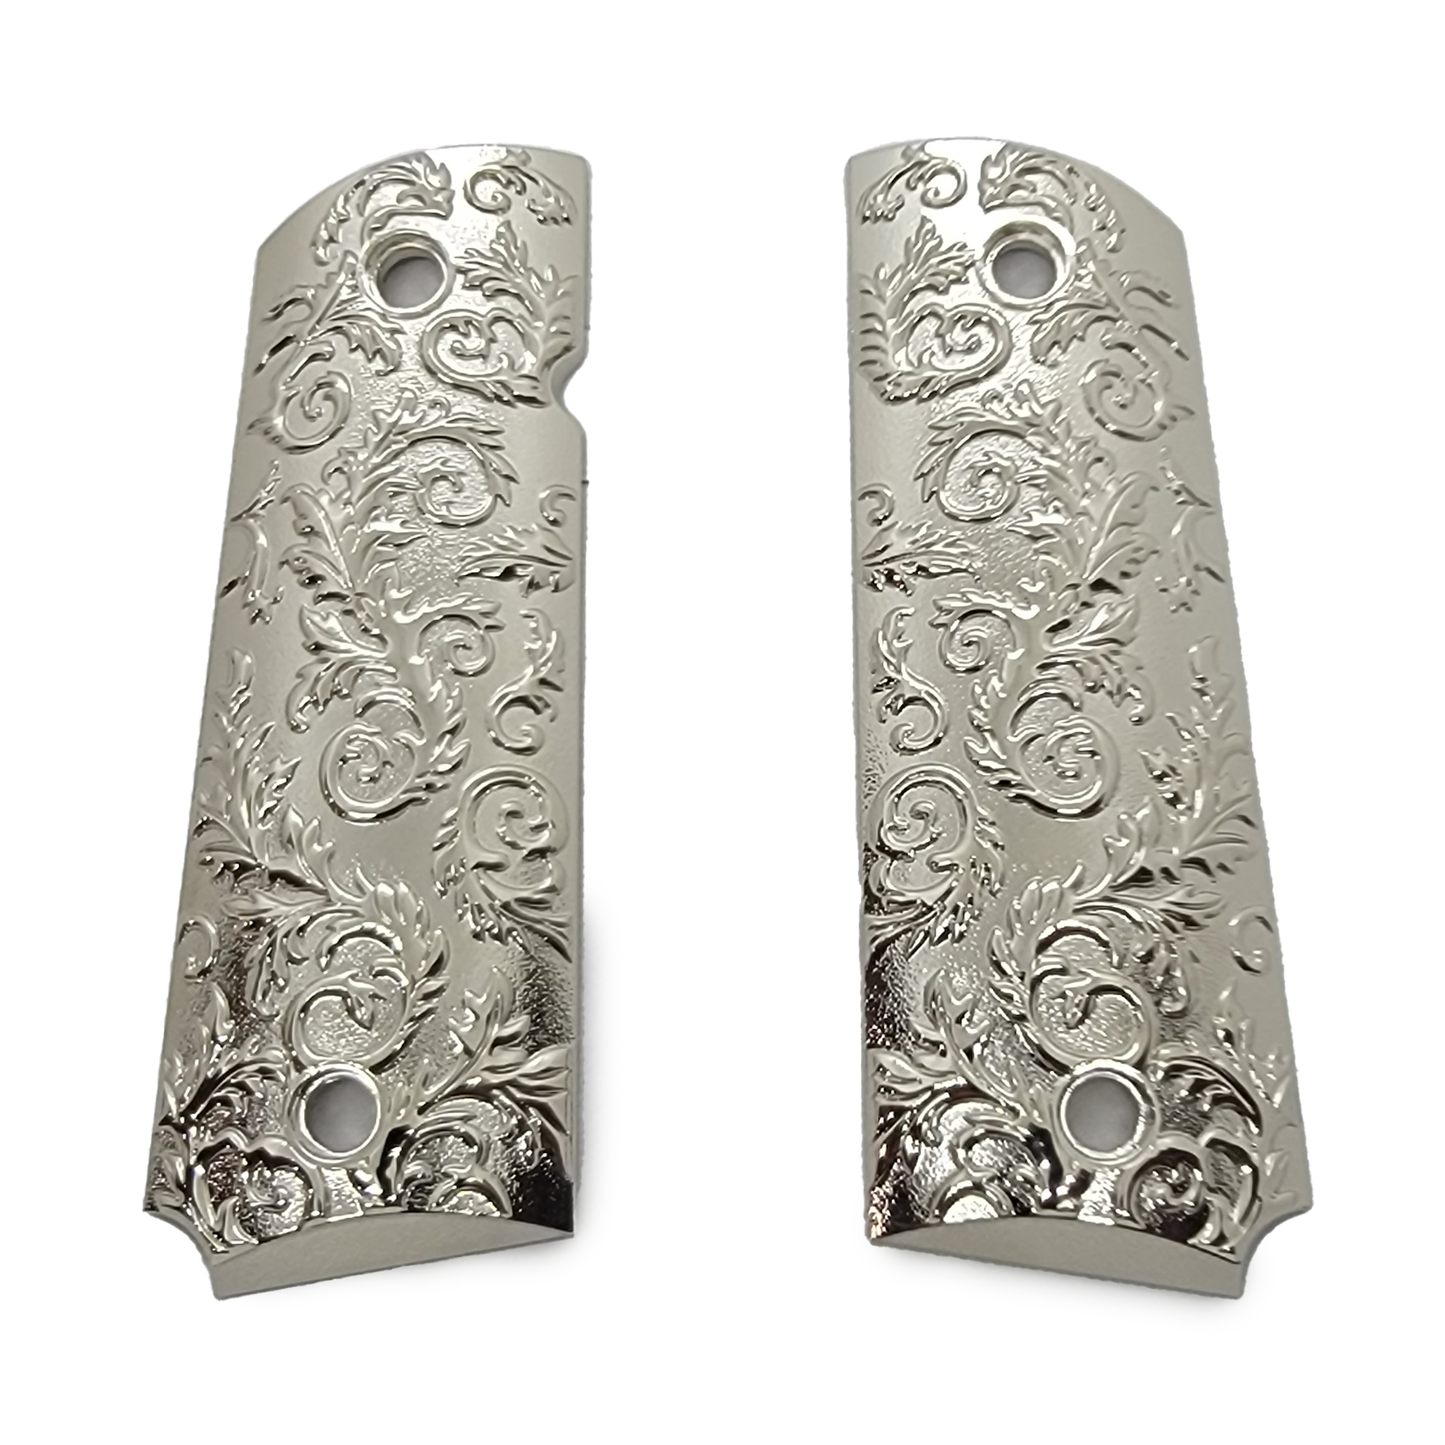 1911 GRIPS FULL SIZE - Metal - Scroll Design W Ambi Safety Nickel #T-SC02